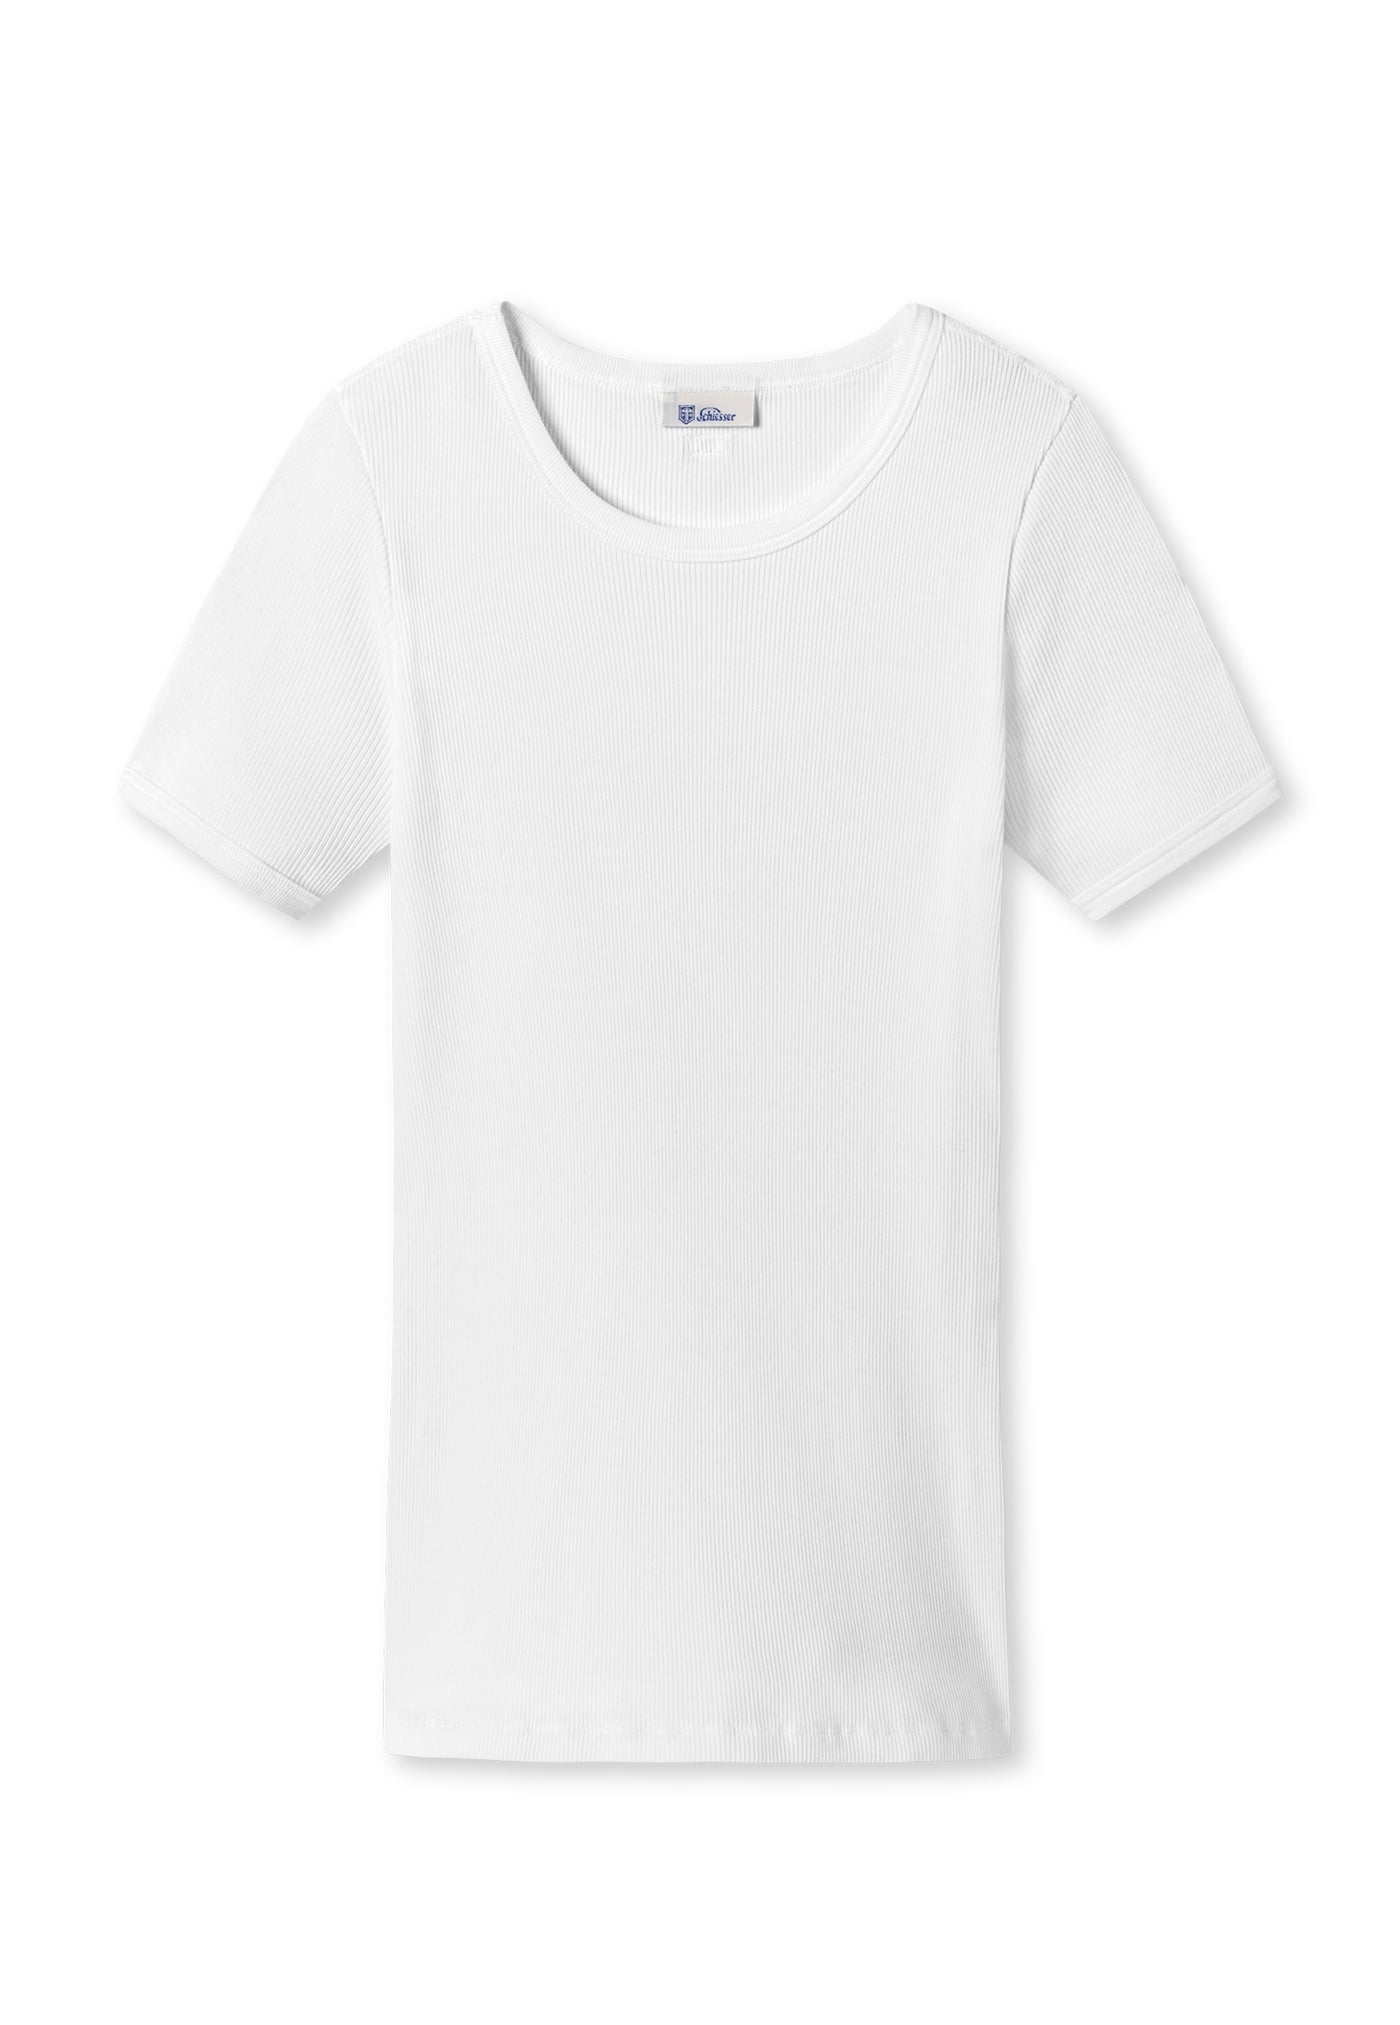 Schiesser Revival - Greta - Short Sleeve Shirt 1/2 - NEW